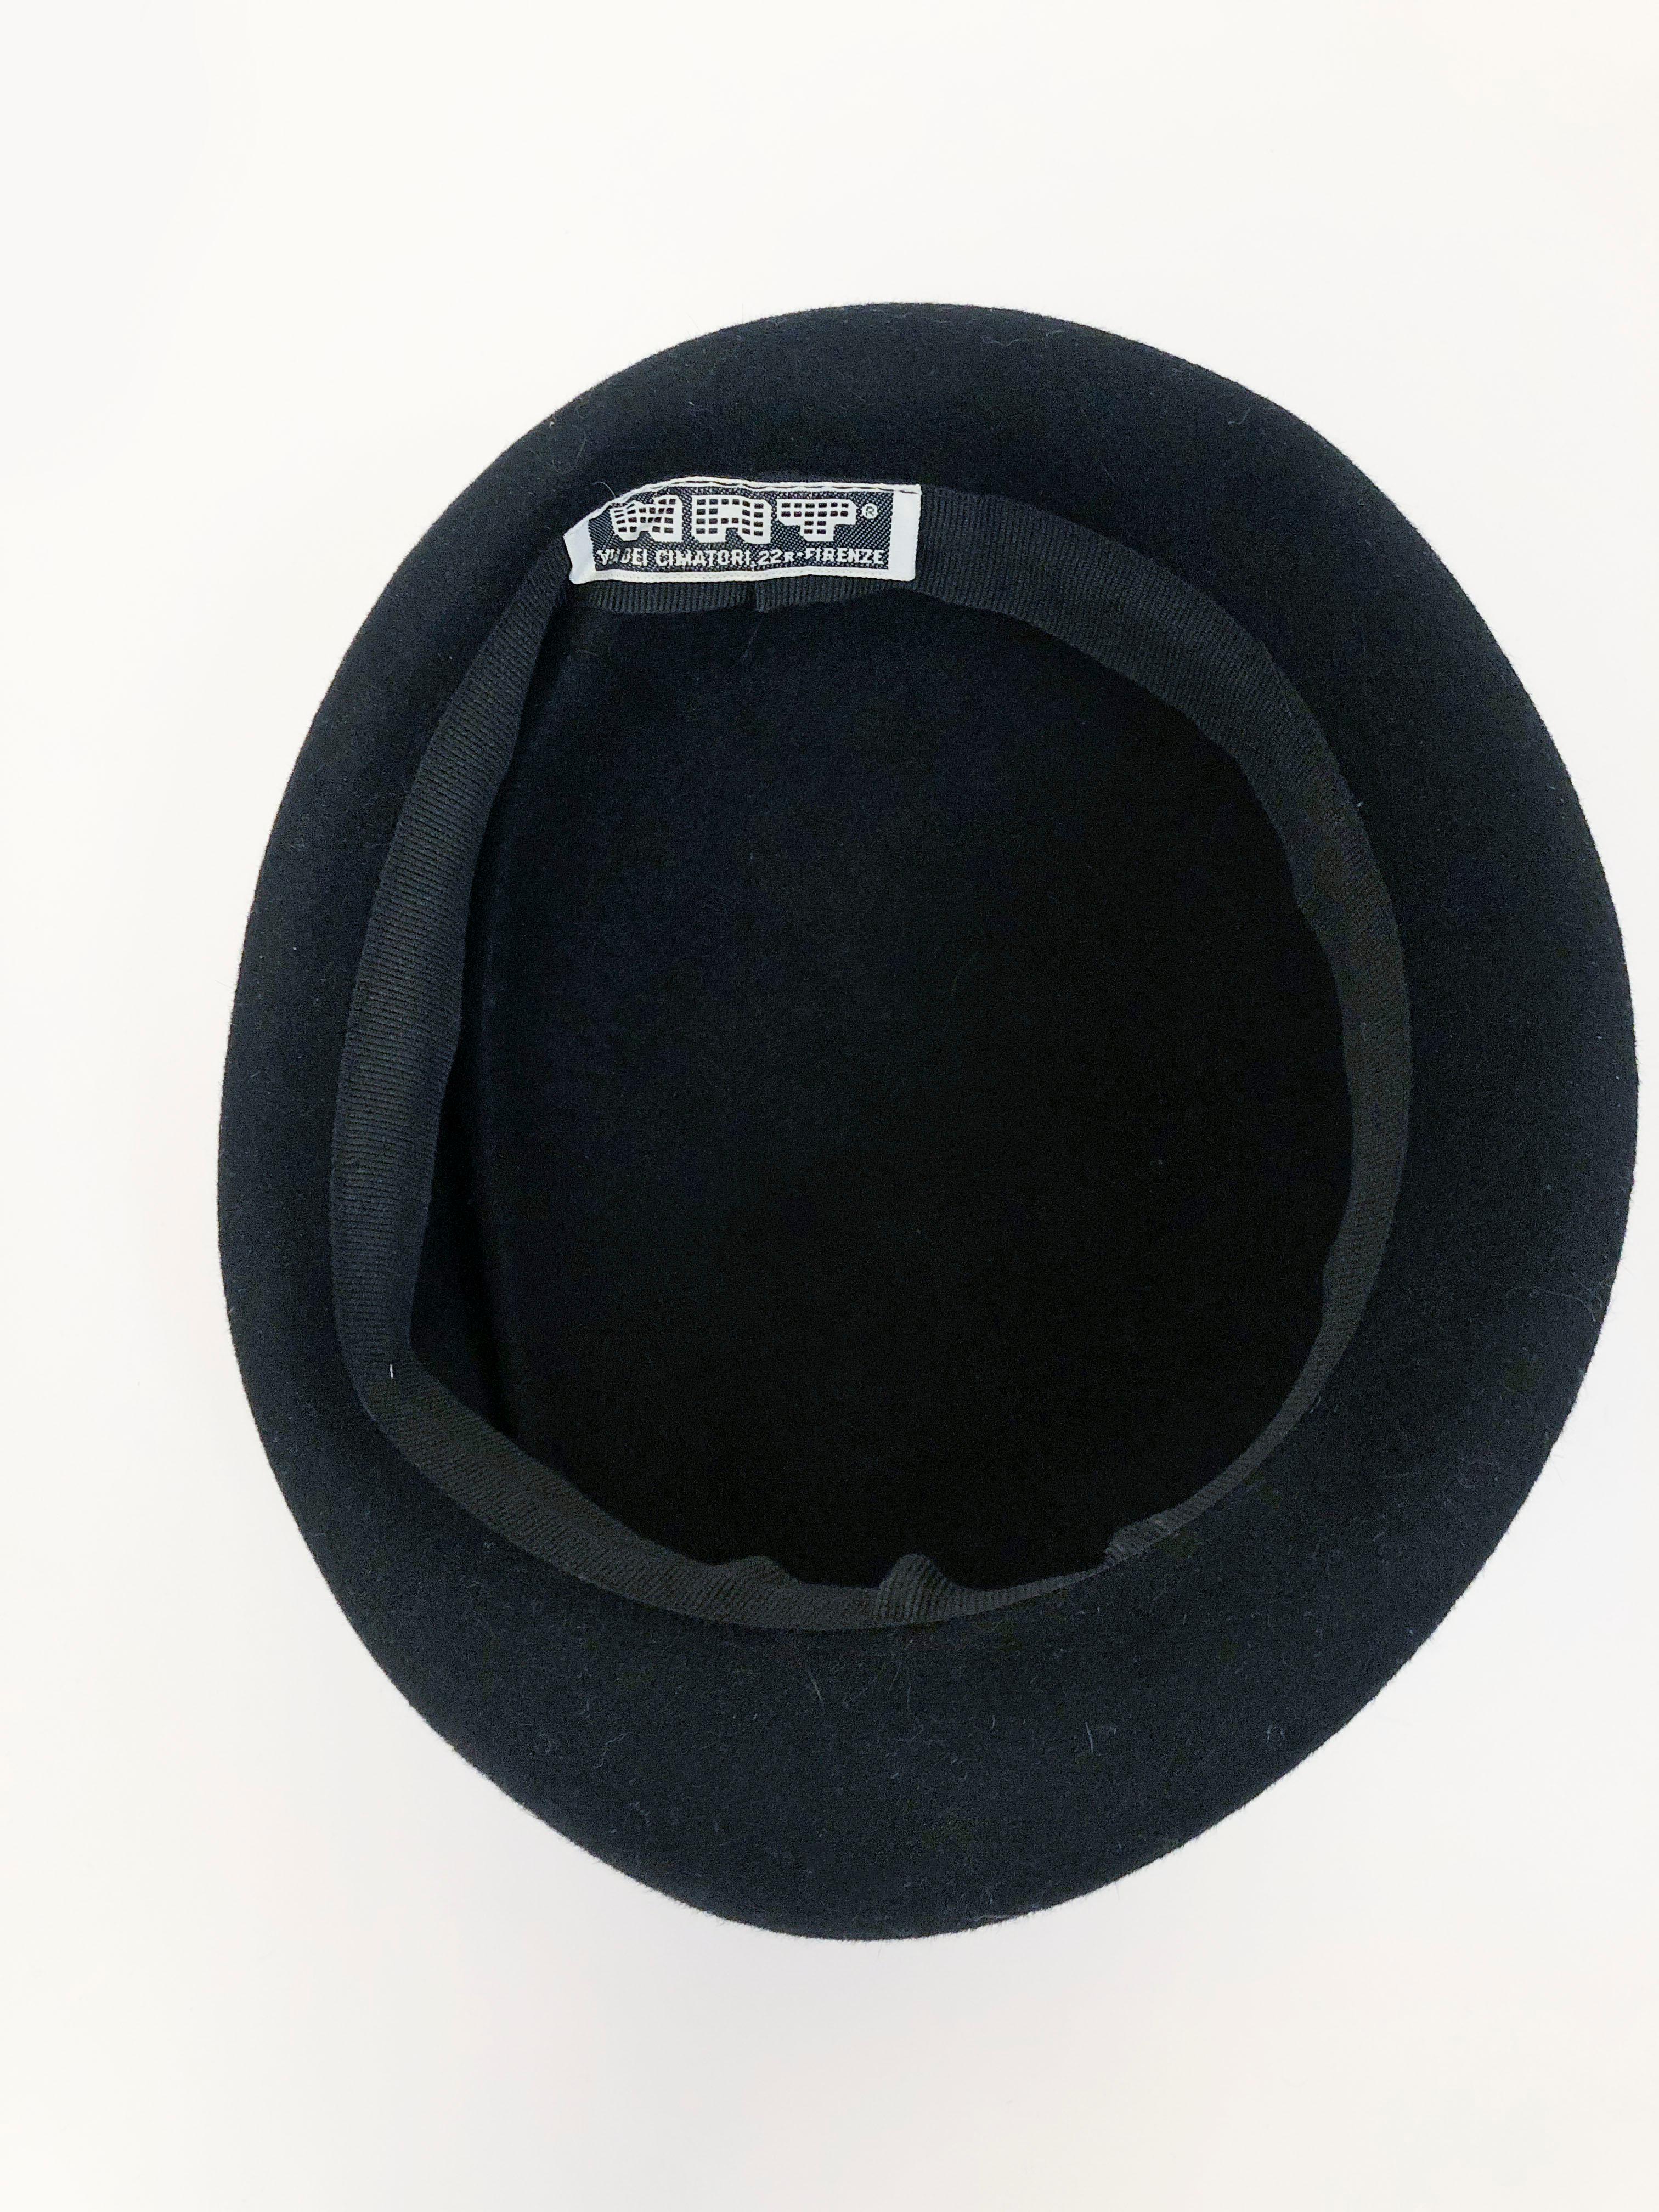 1960s/1970s Black Fur Felt Hat with Rhinestone Accents 3